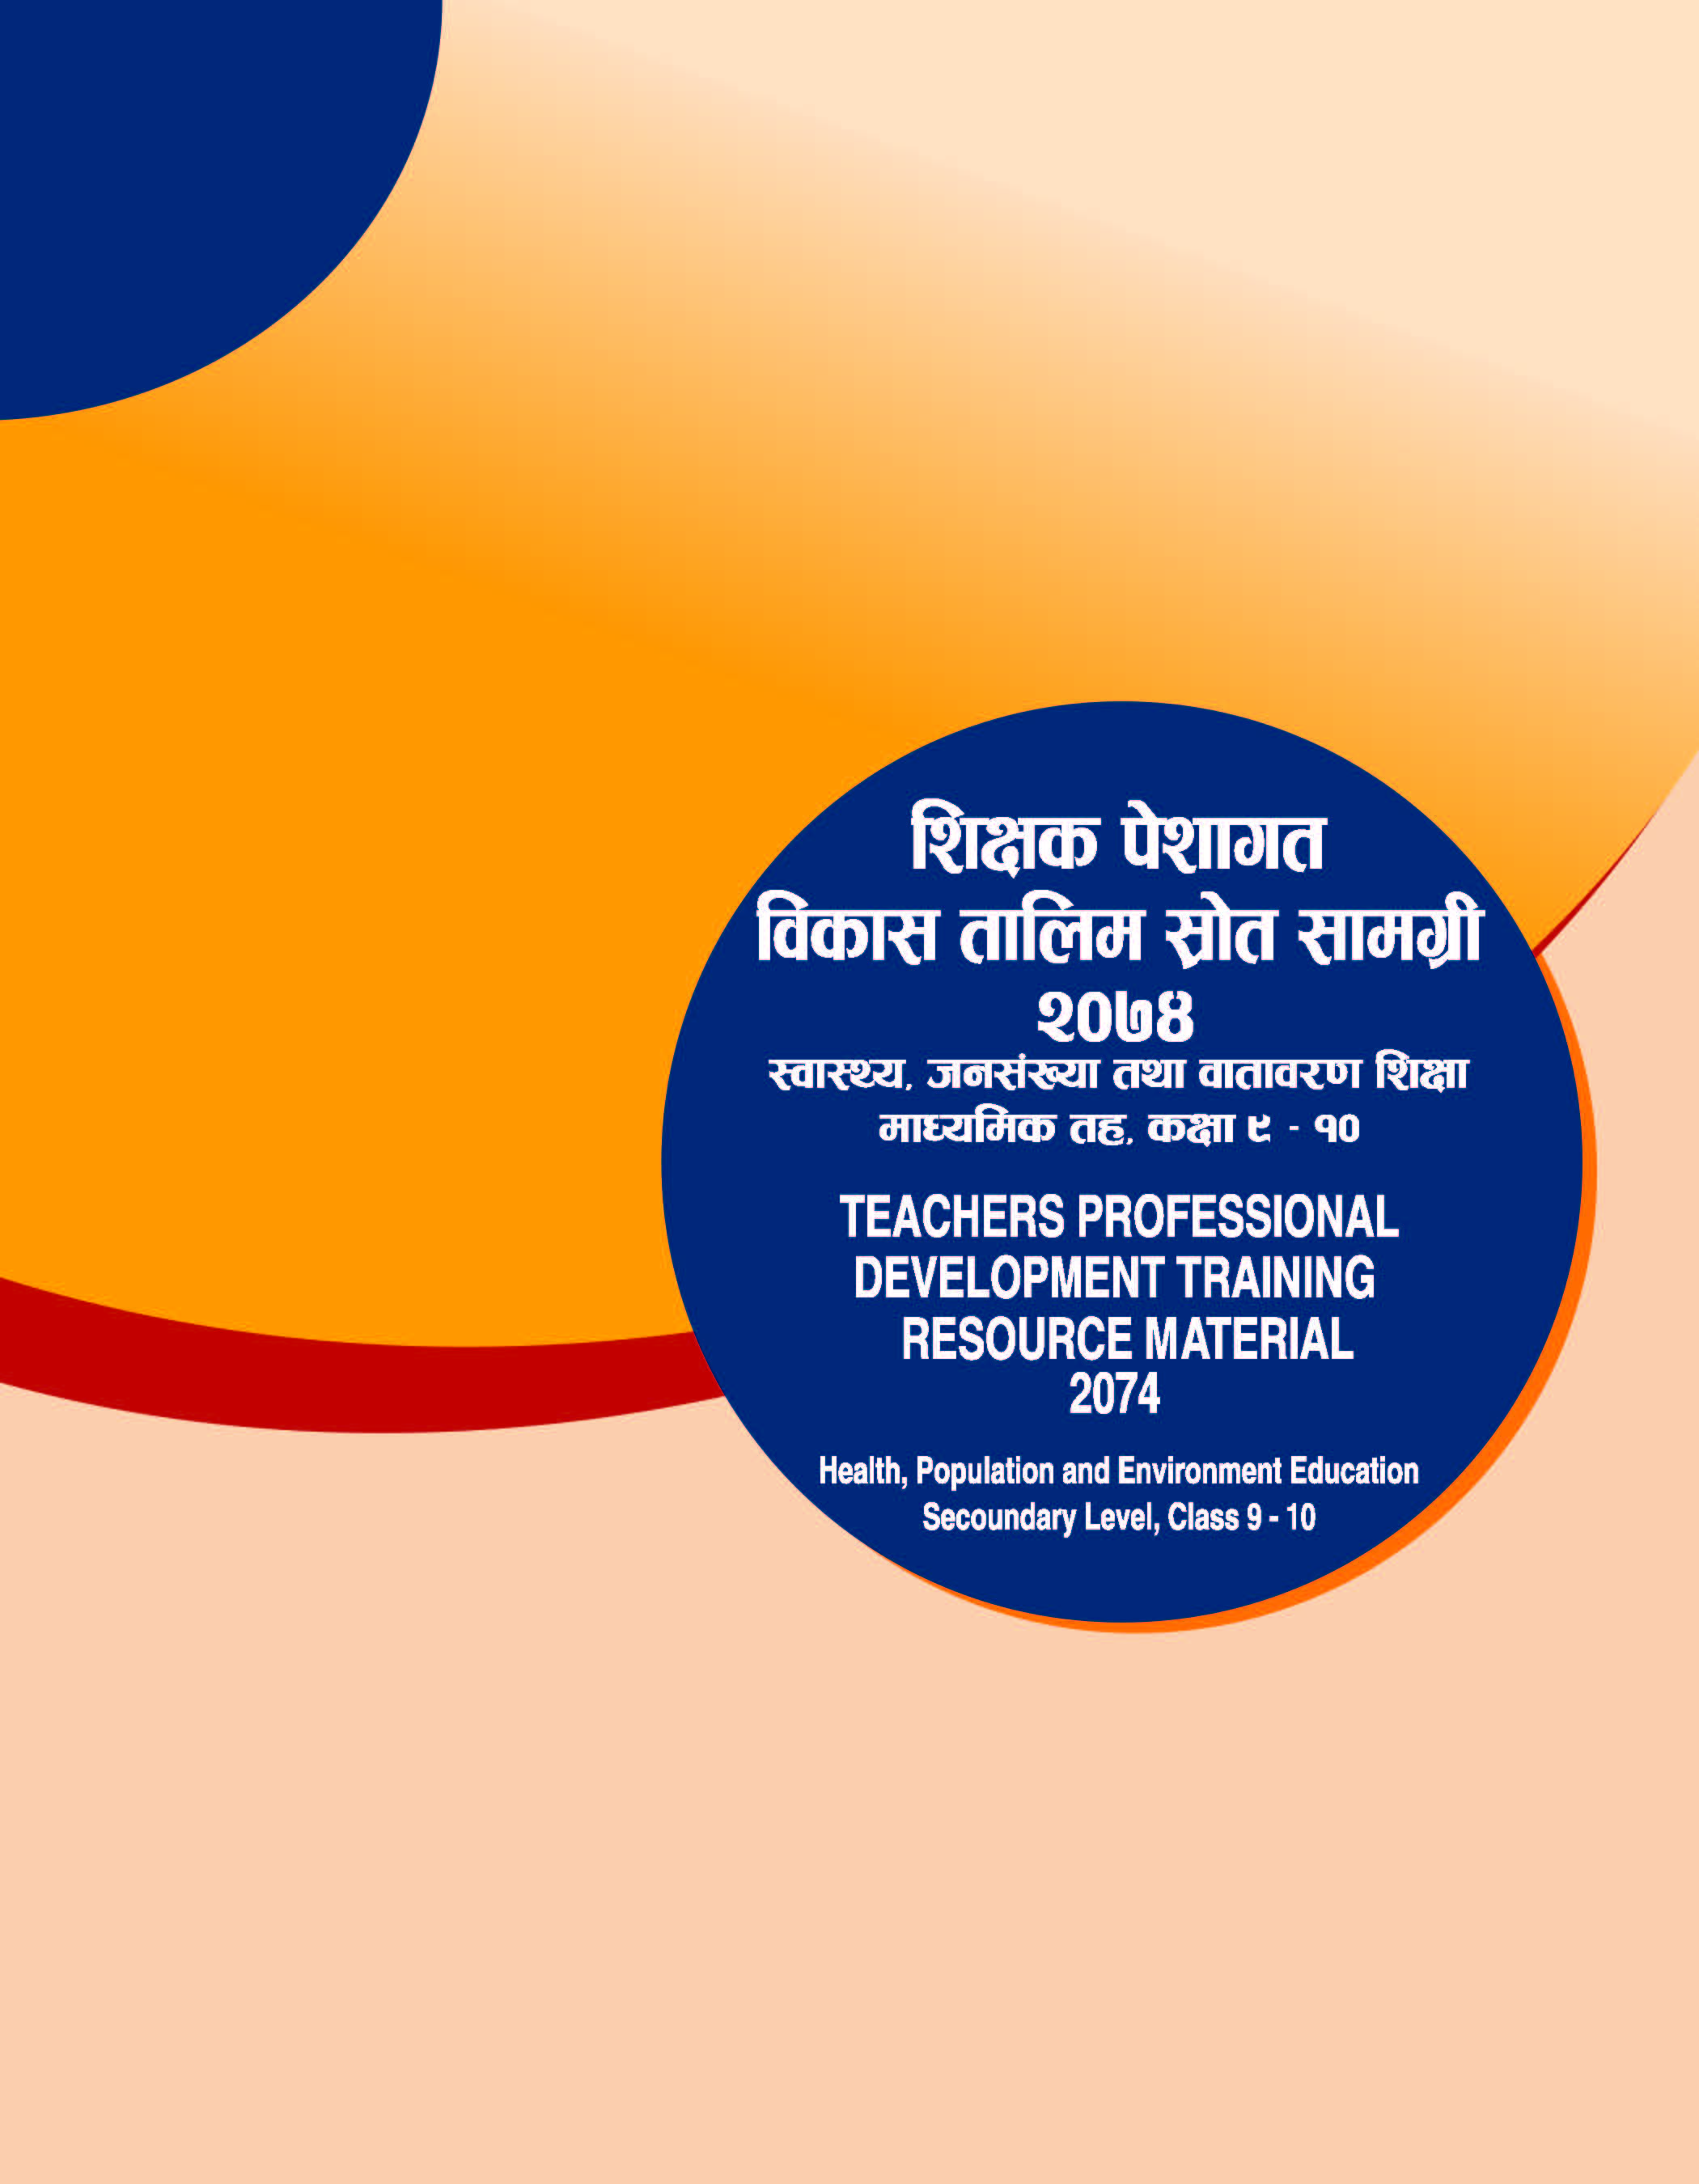 Teachers Professional Development Training Resource Material 2074